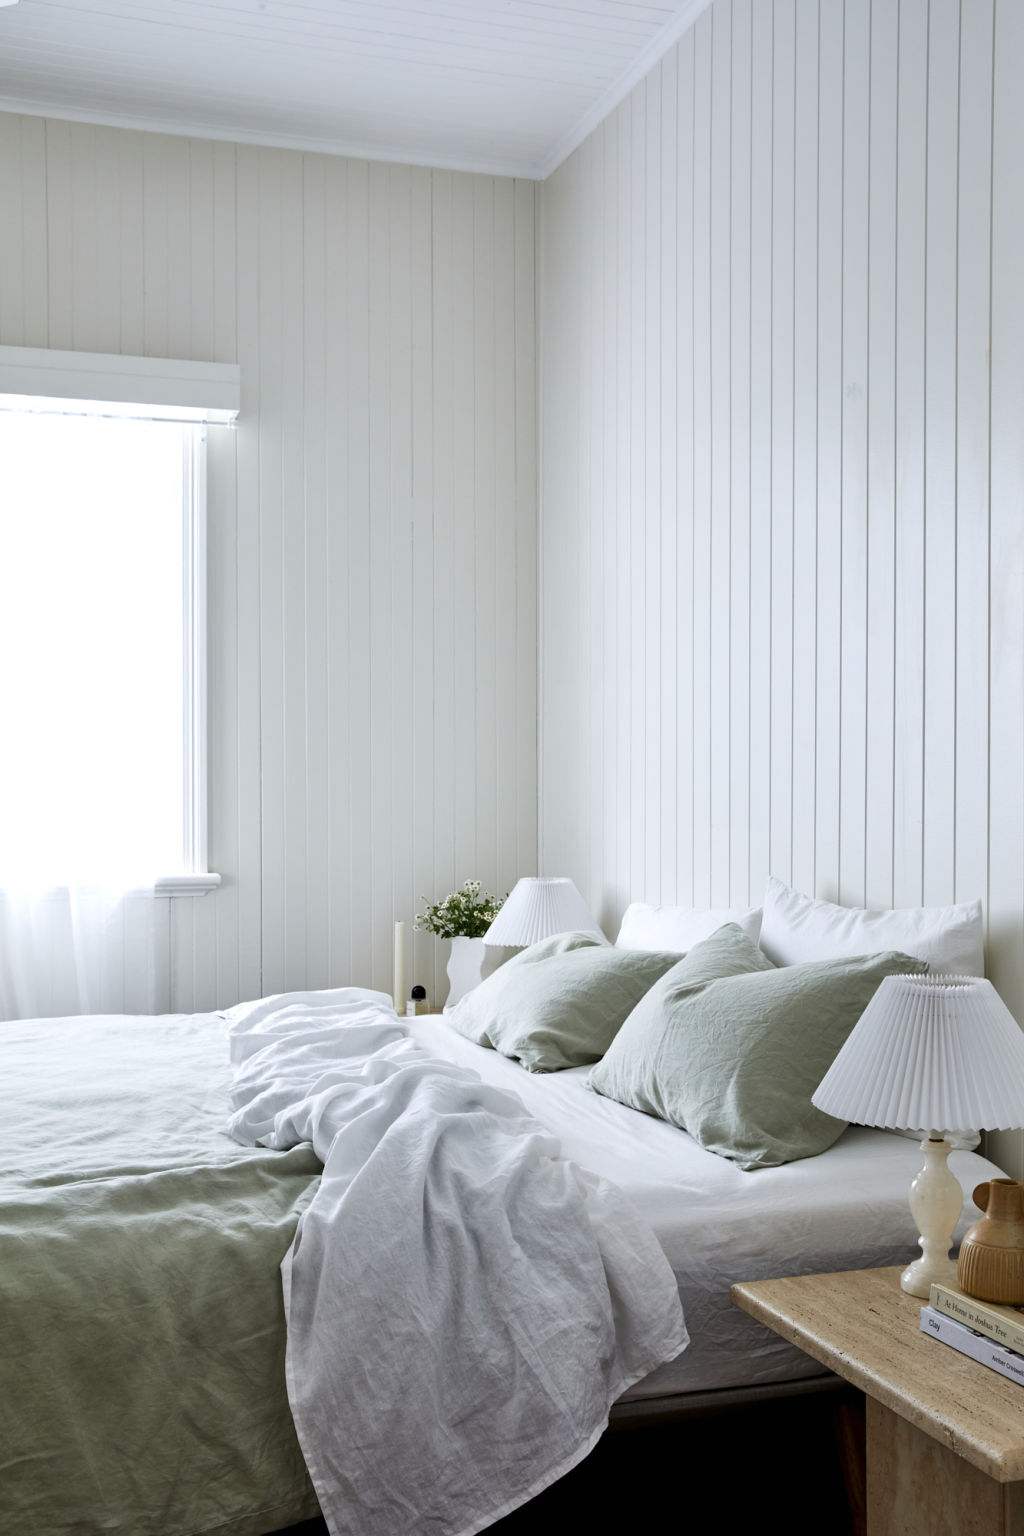 Linen is ideal for Australian weather, Bed Threads founder Genevieve Rosen-Biller says.